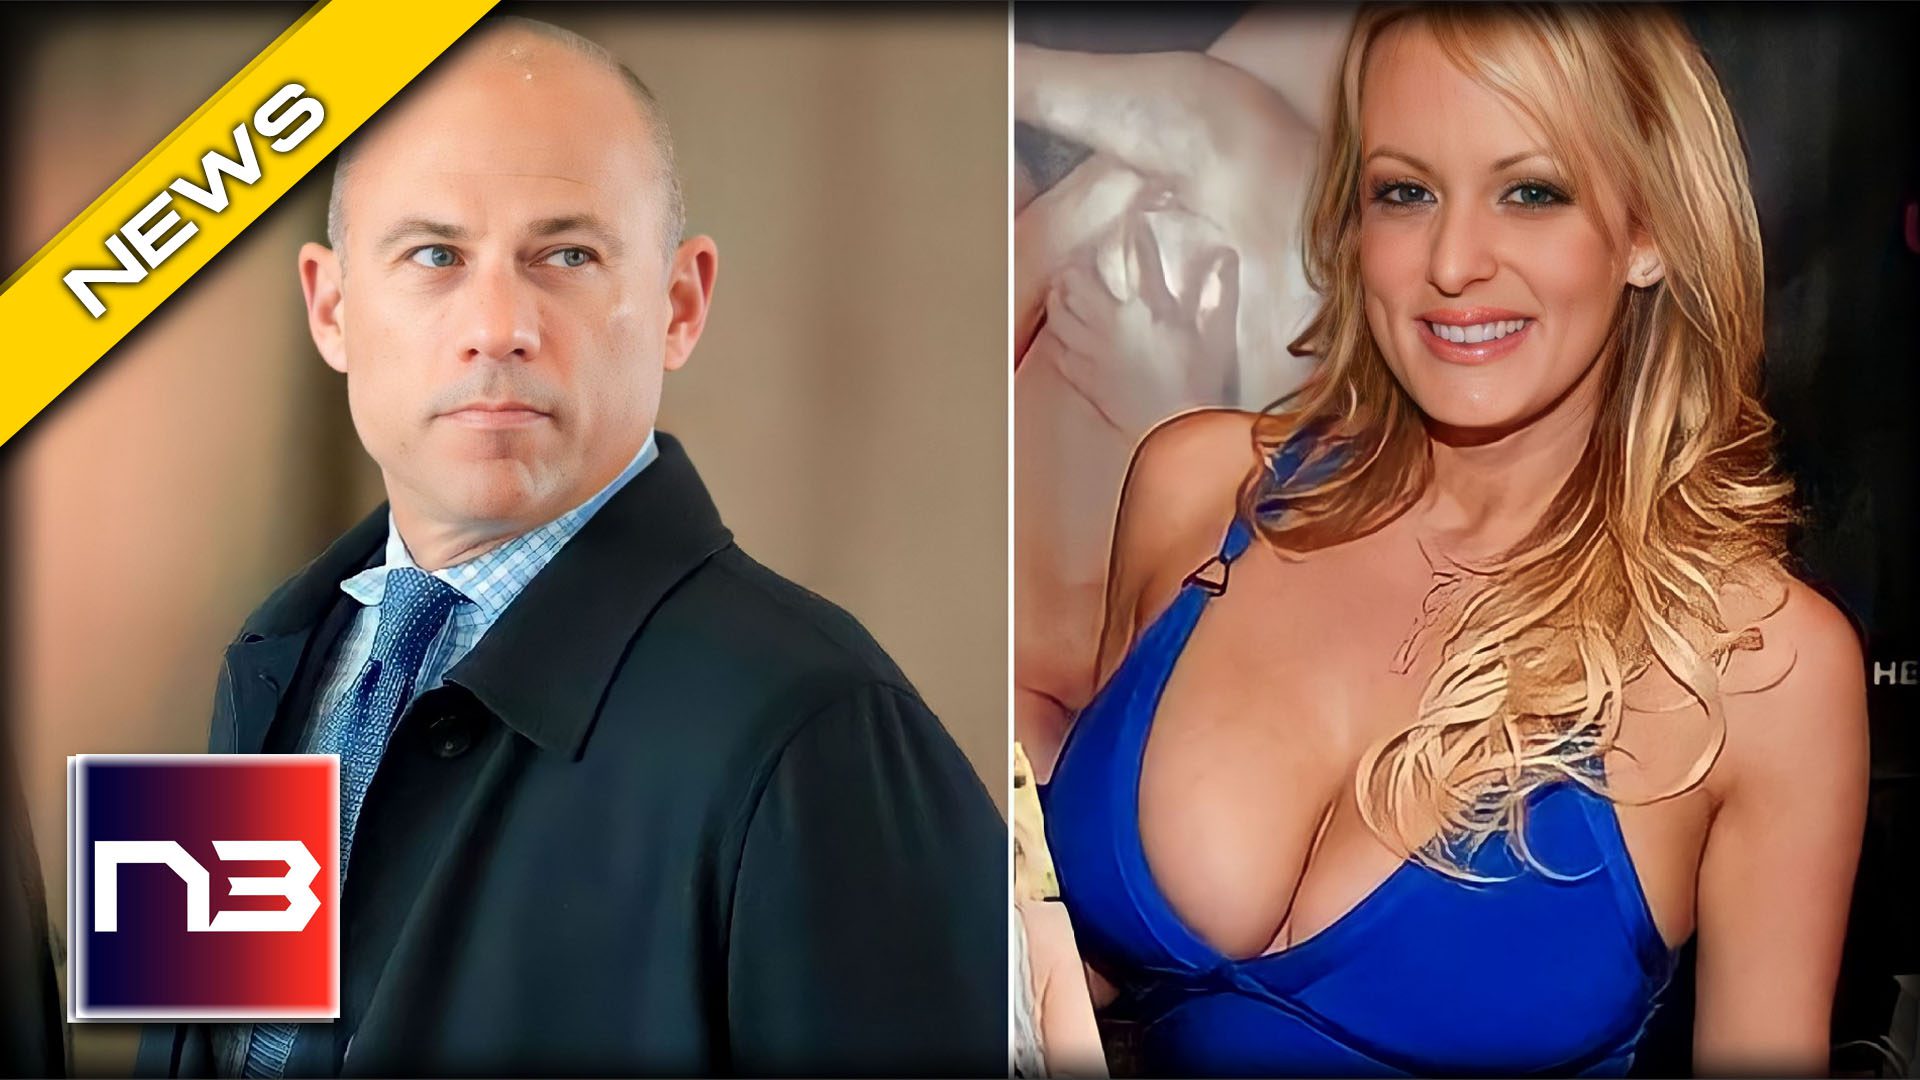 Porn Star Stormy Daniels Gets The Money Shot in Court Against Michael Avenatti